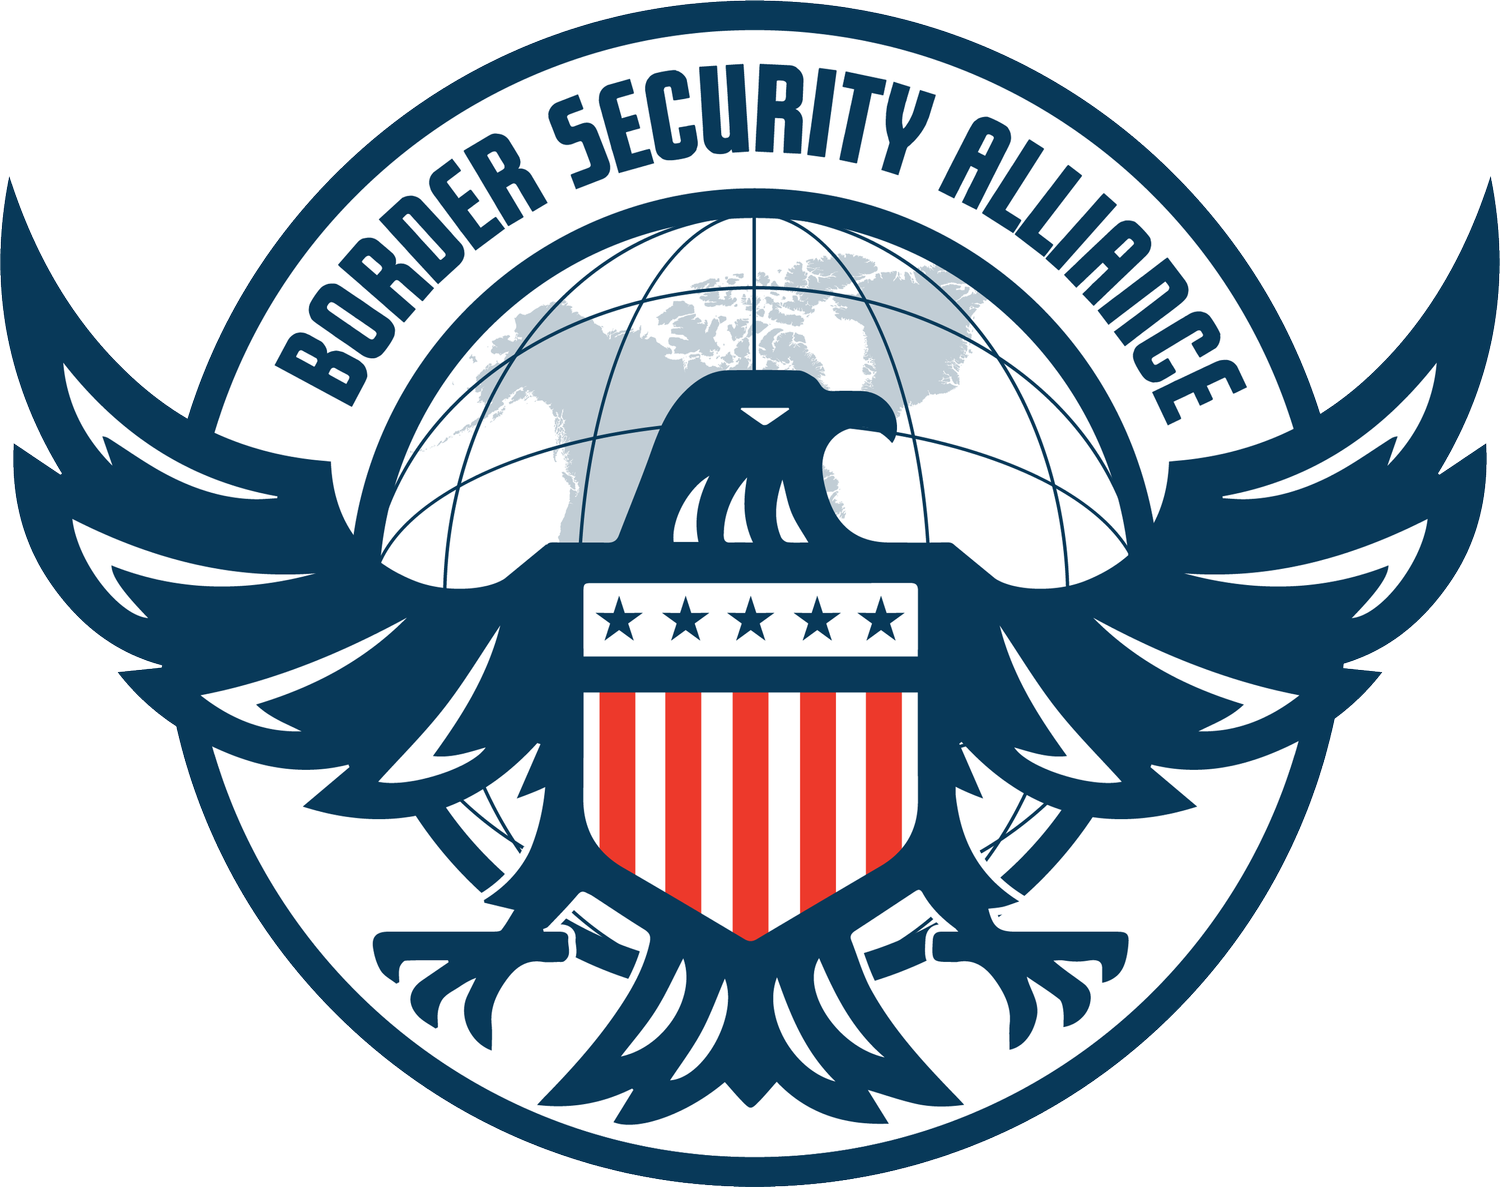 Border Security Alliance